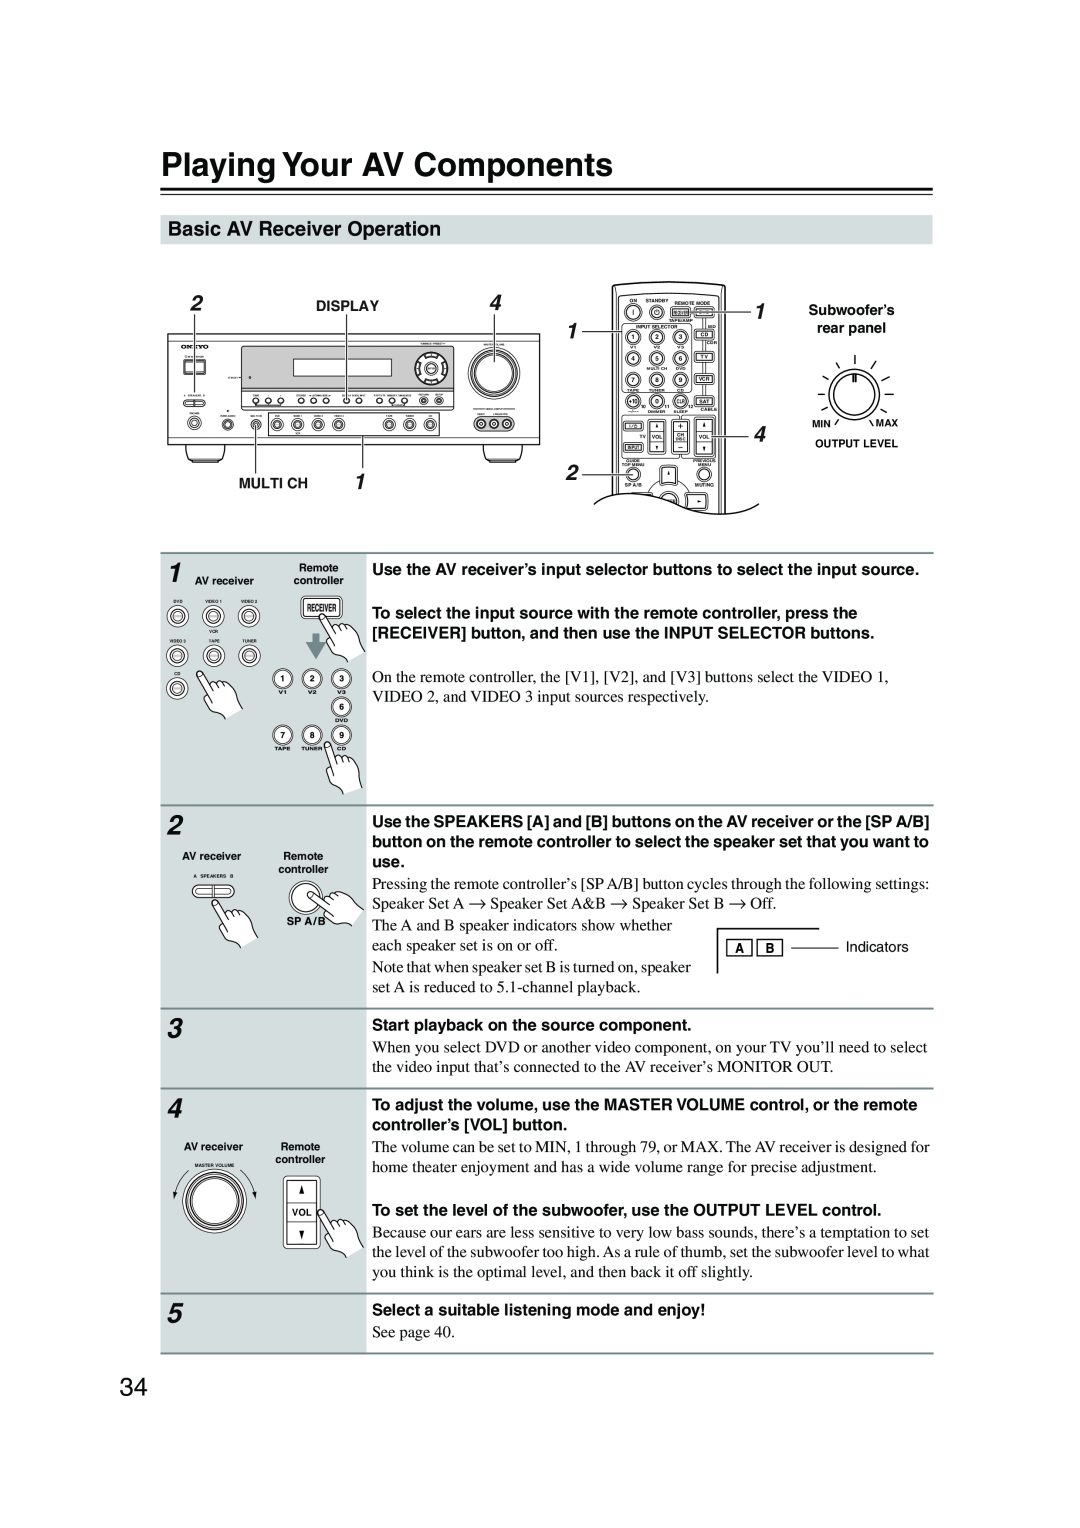 Onkyo HT-S780 instruction manual Playing Your AV Components, Basic AV Receiver Operation 